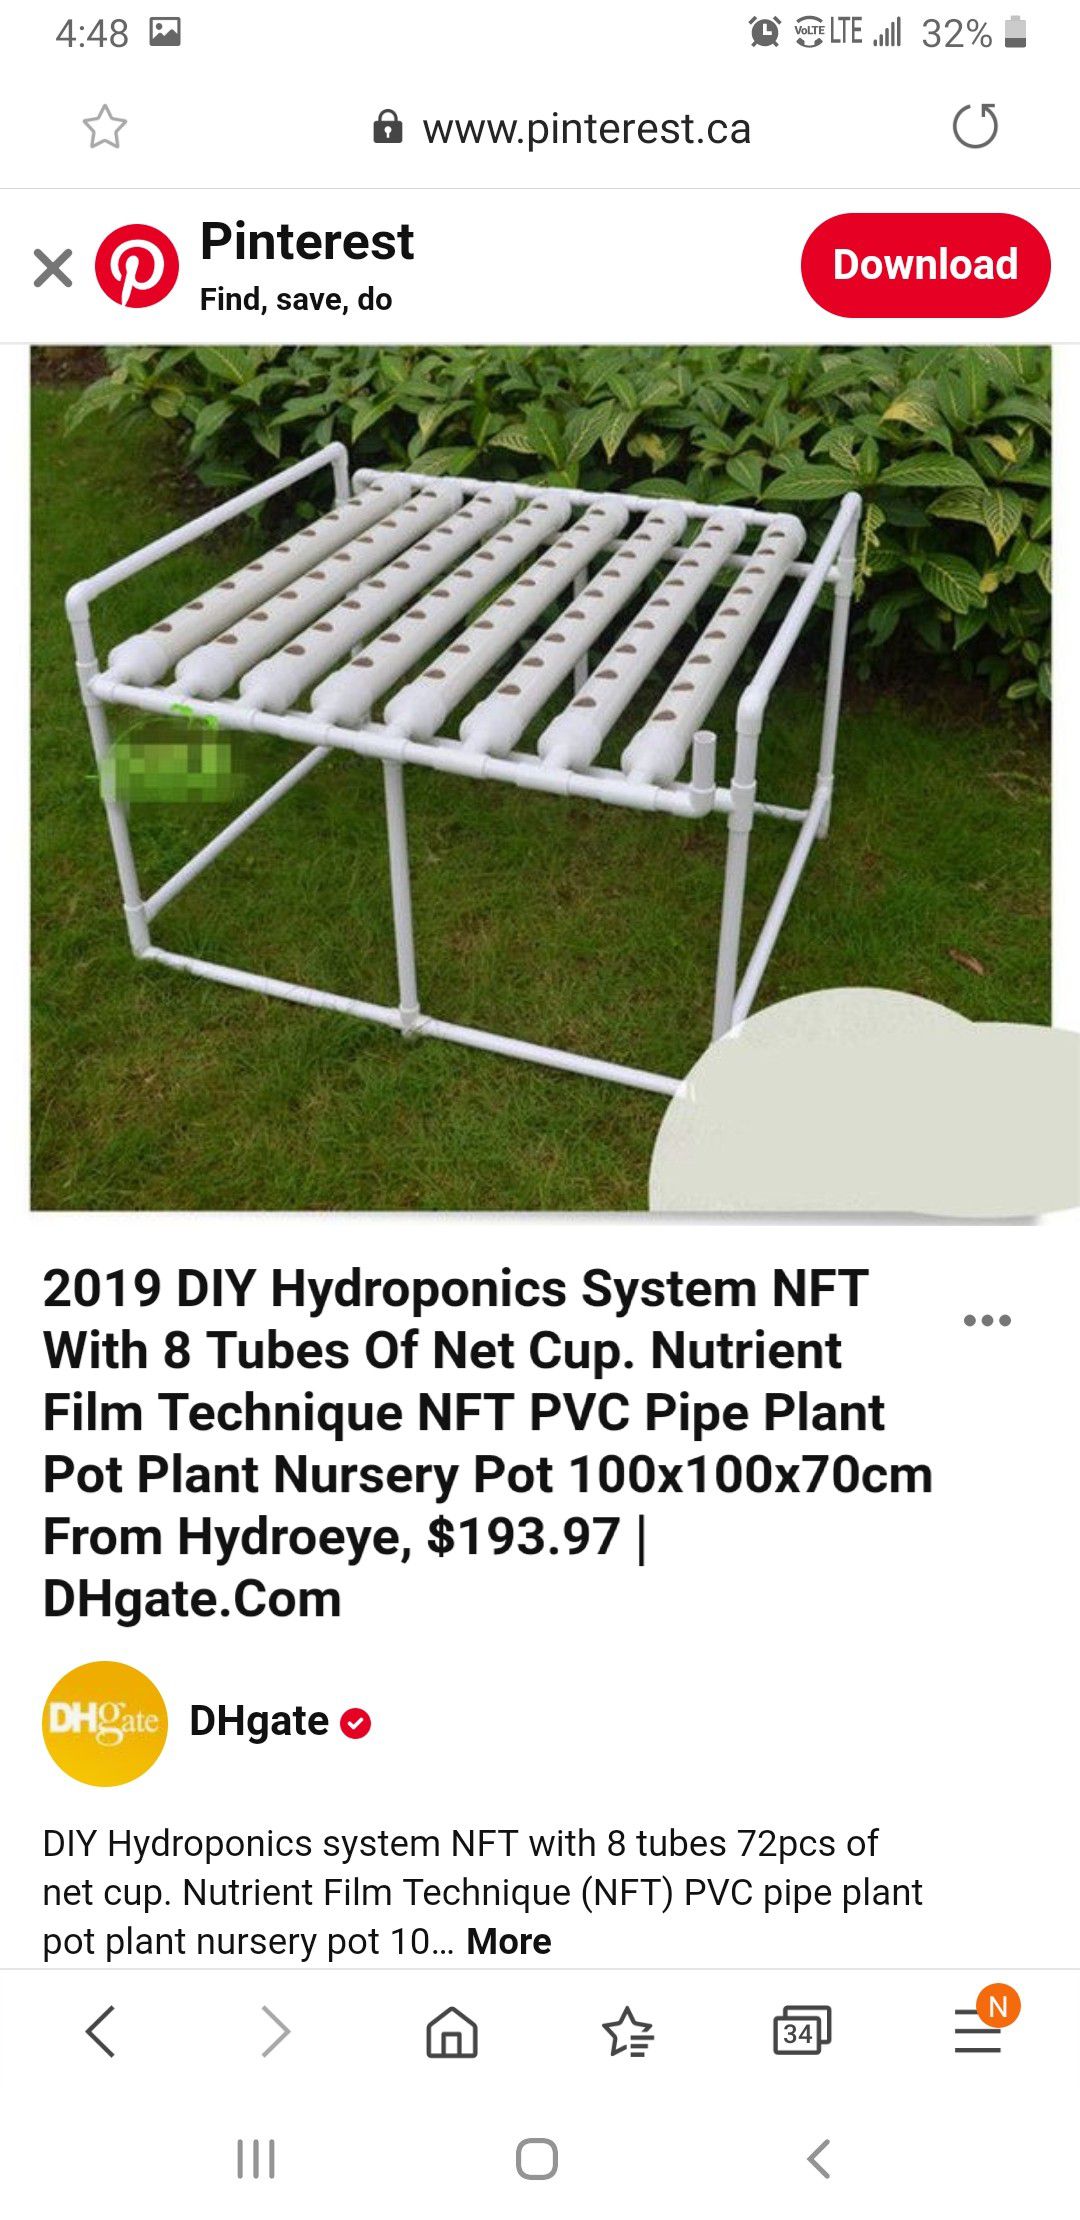 Used NFT hydroponics system.